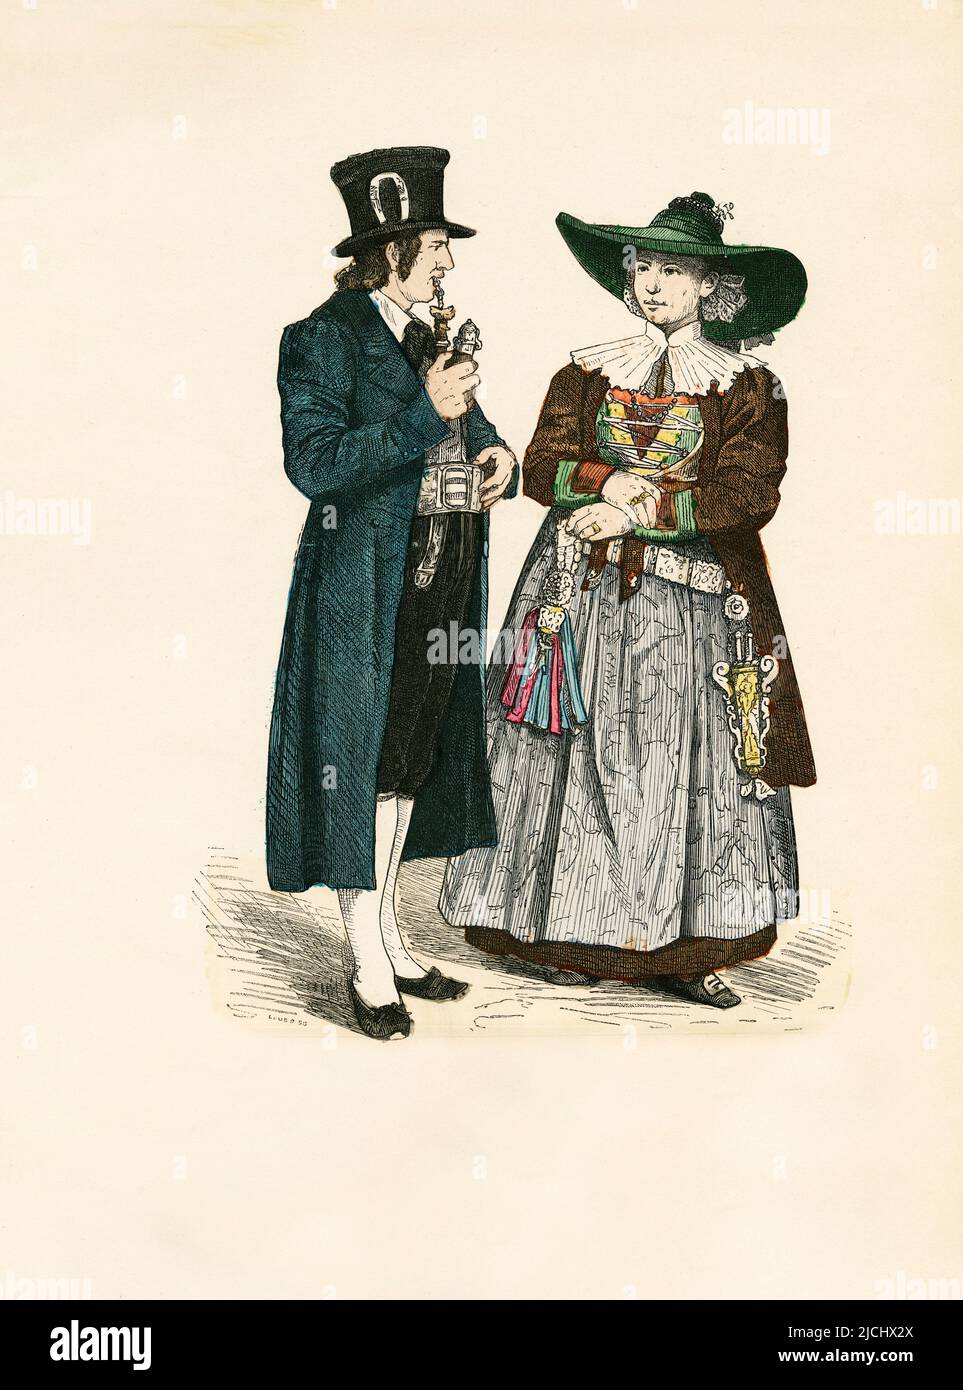 Tyrolean Folk Dress, Grodner Valley, late 19th Century, Illustration, The History of Costume, Braun & Schneider, Munich, Germany, 1861-1880 Stock Photo